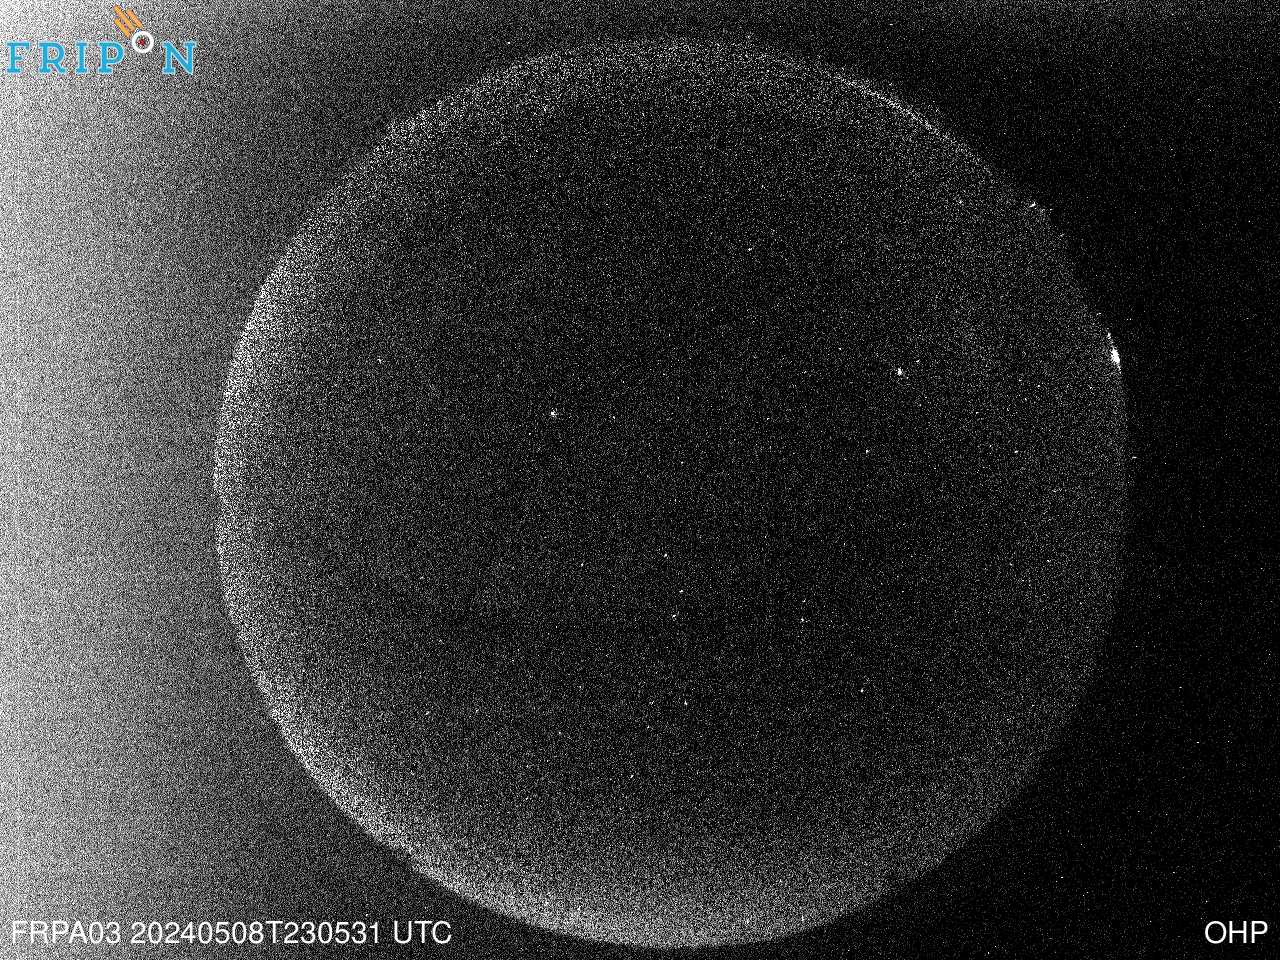 Full size image detection Saint-Michel-l'Observatoire (FRPA03) Universal Time